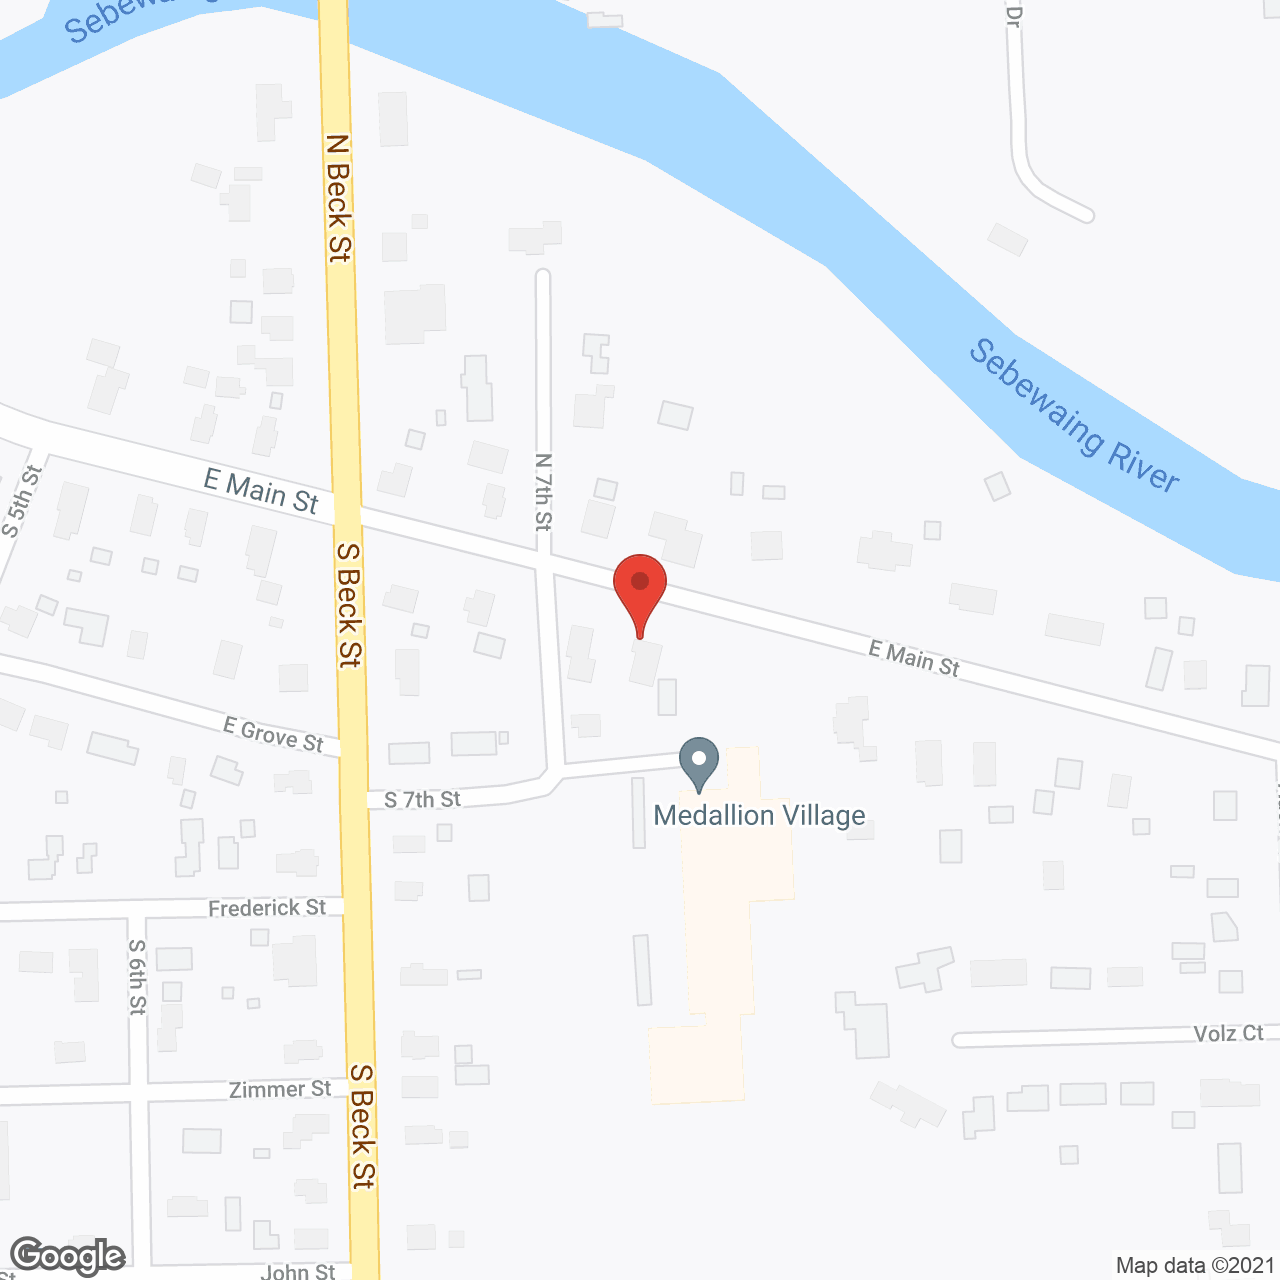 Medallion Village in google map